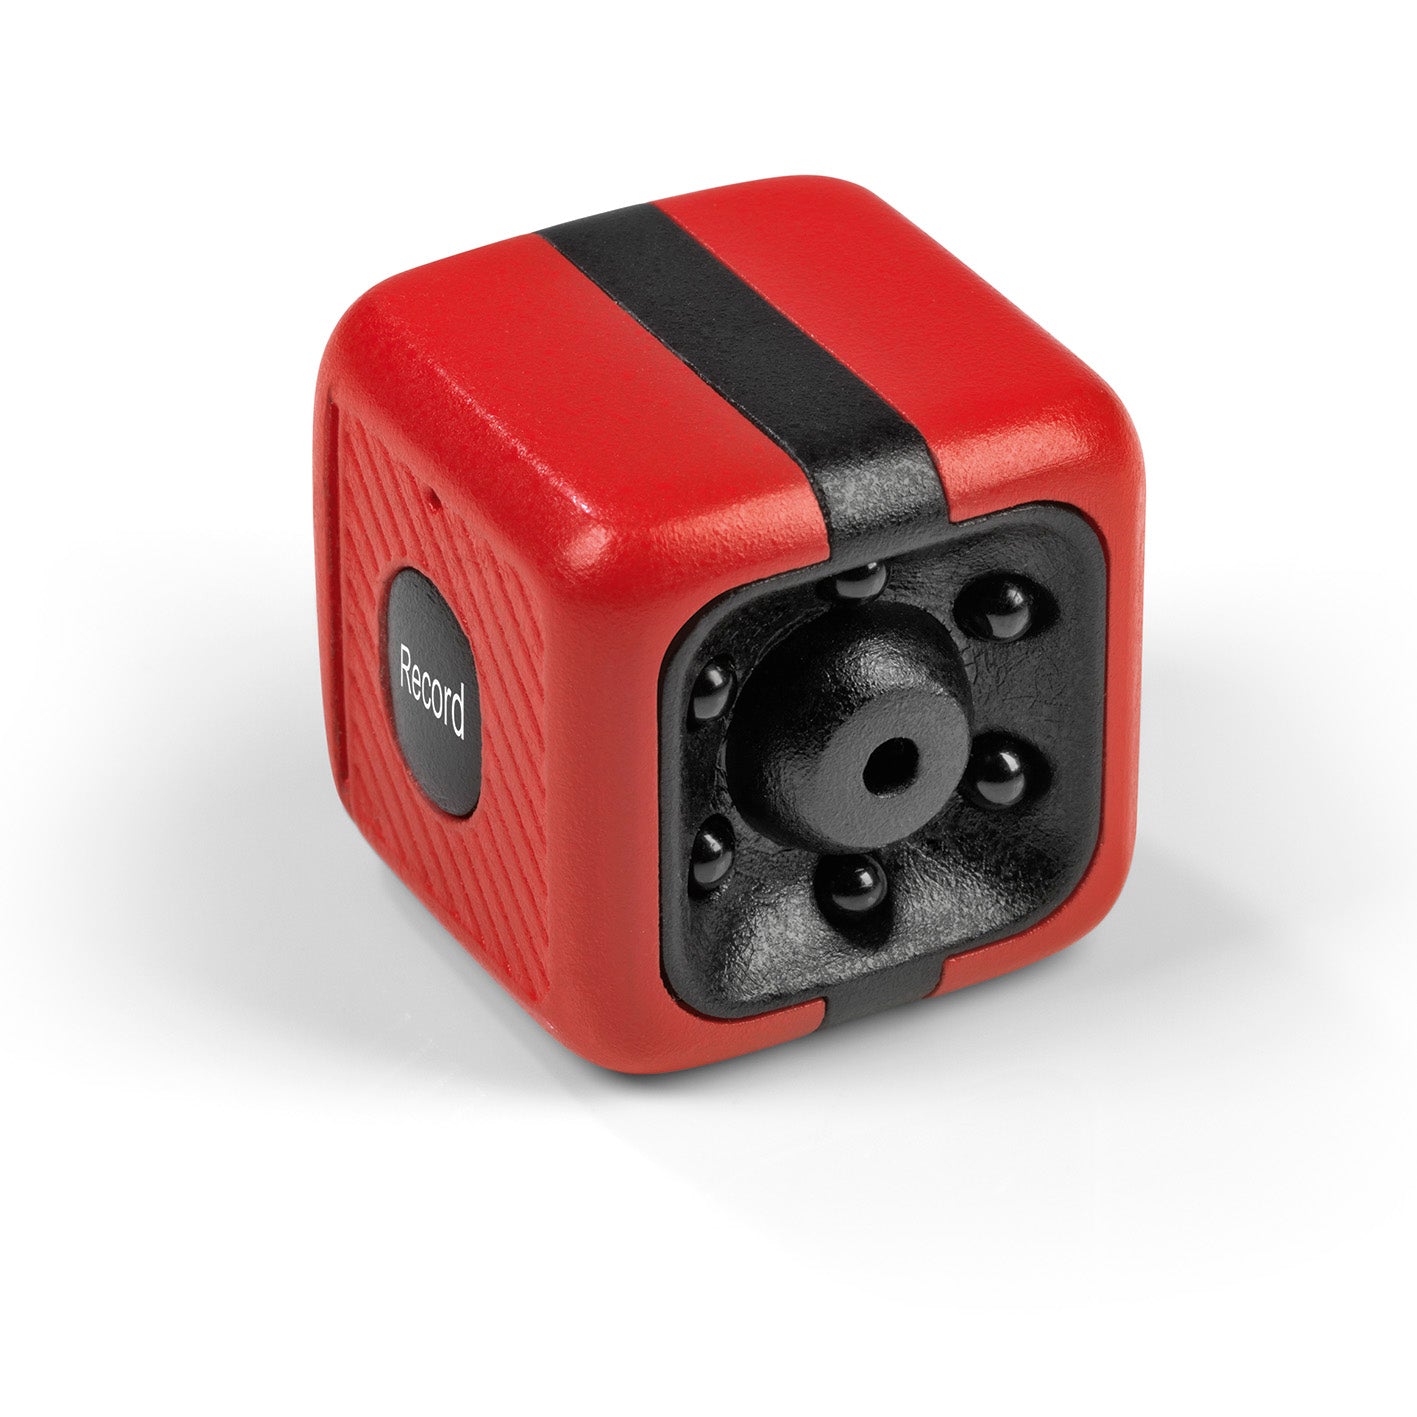 Mini-Kamera 3,7V - mit Speicherkarte 8GB - rot/schwarz